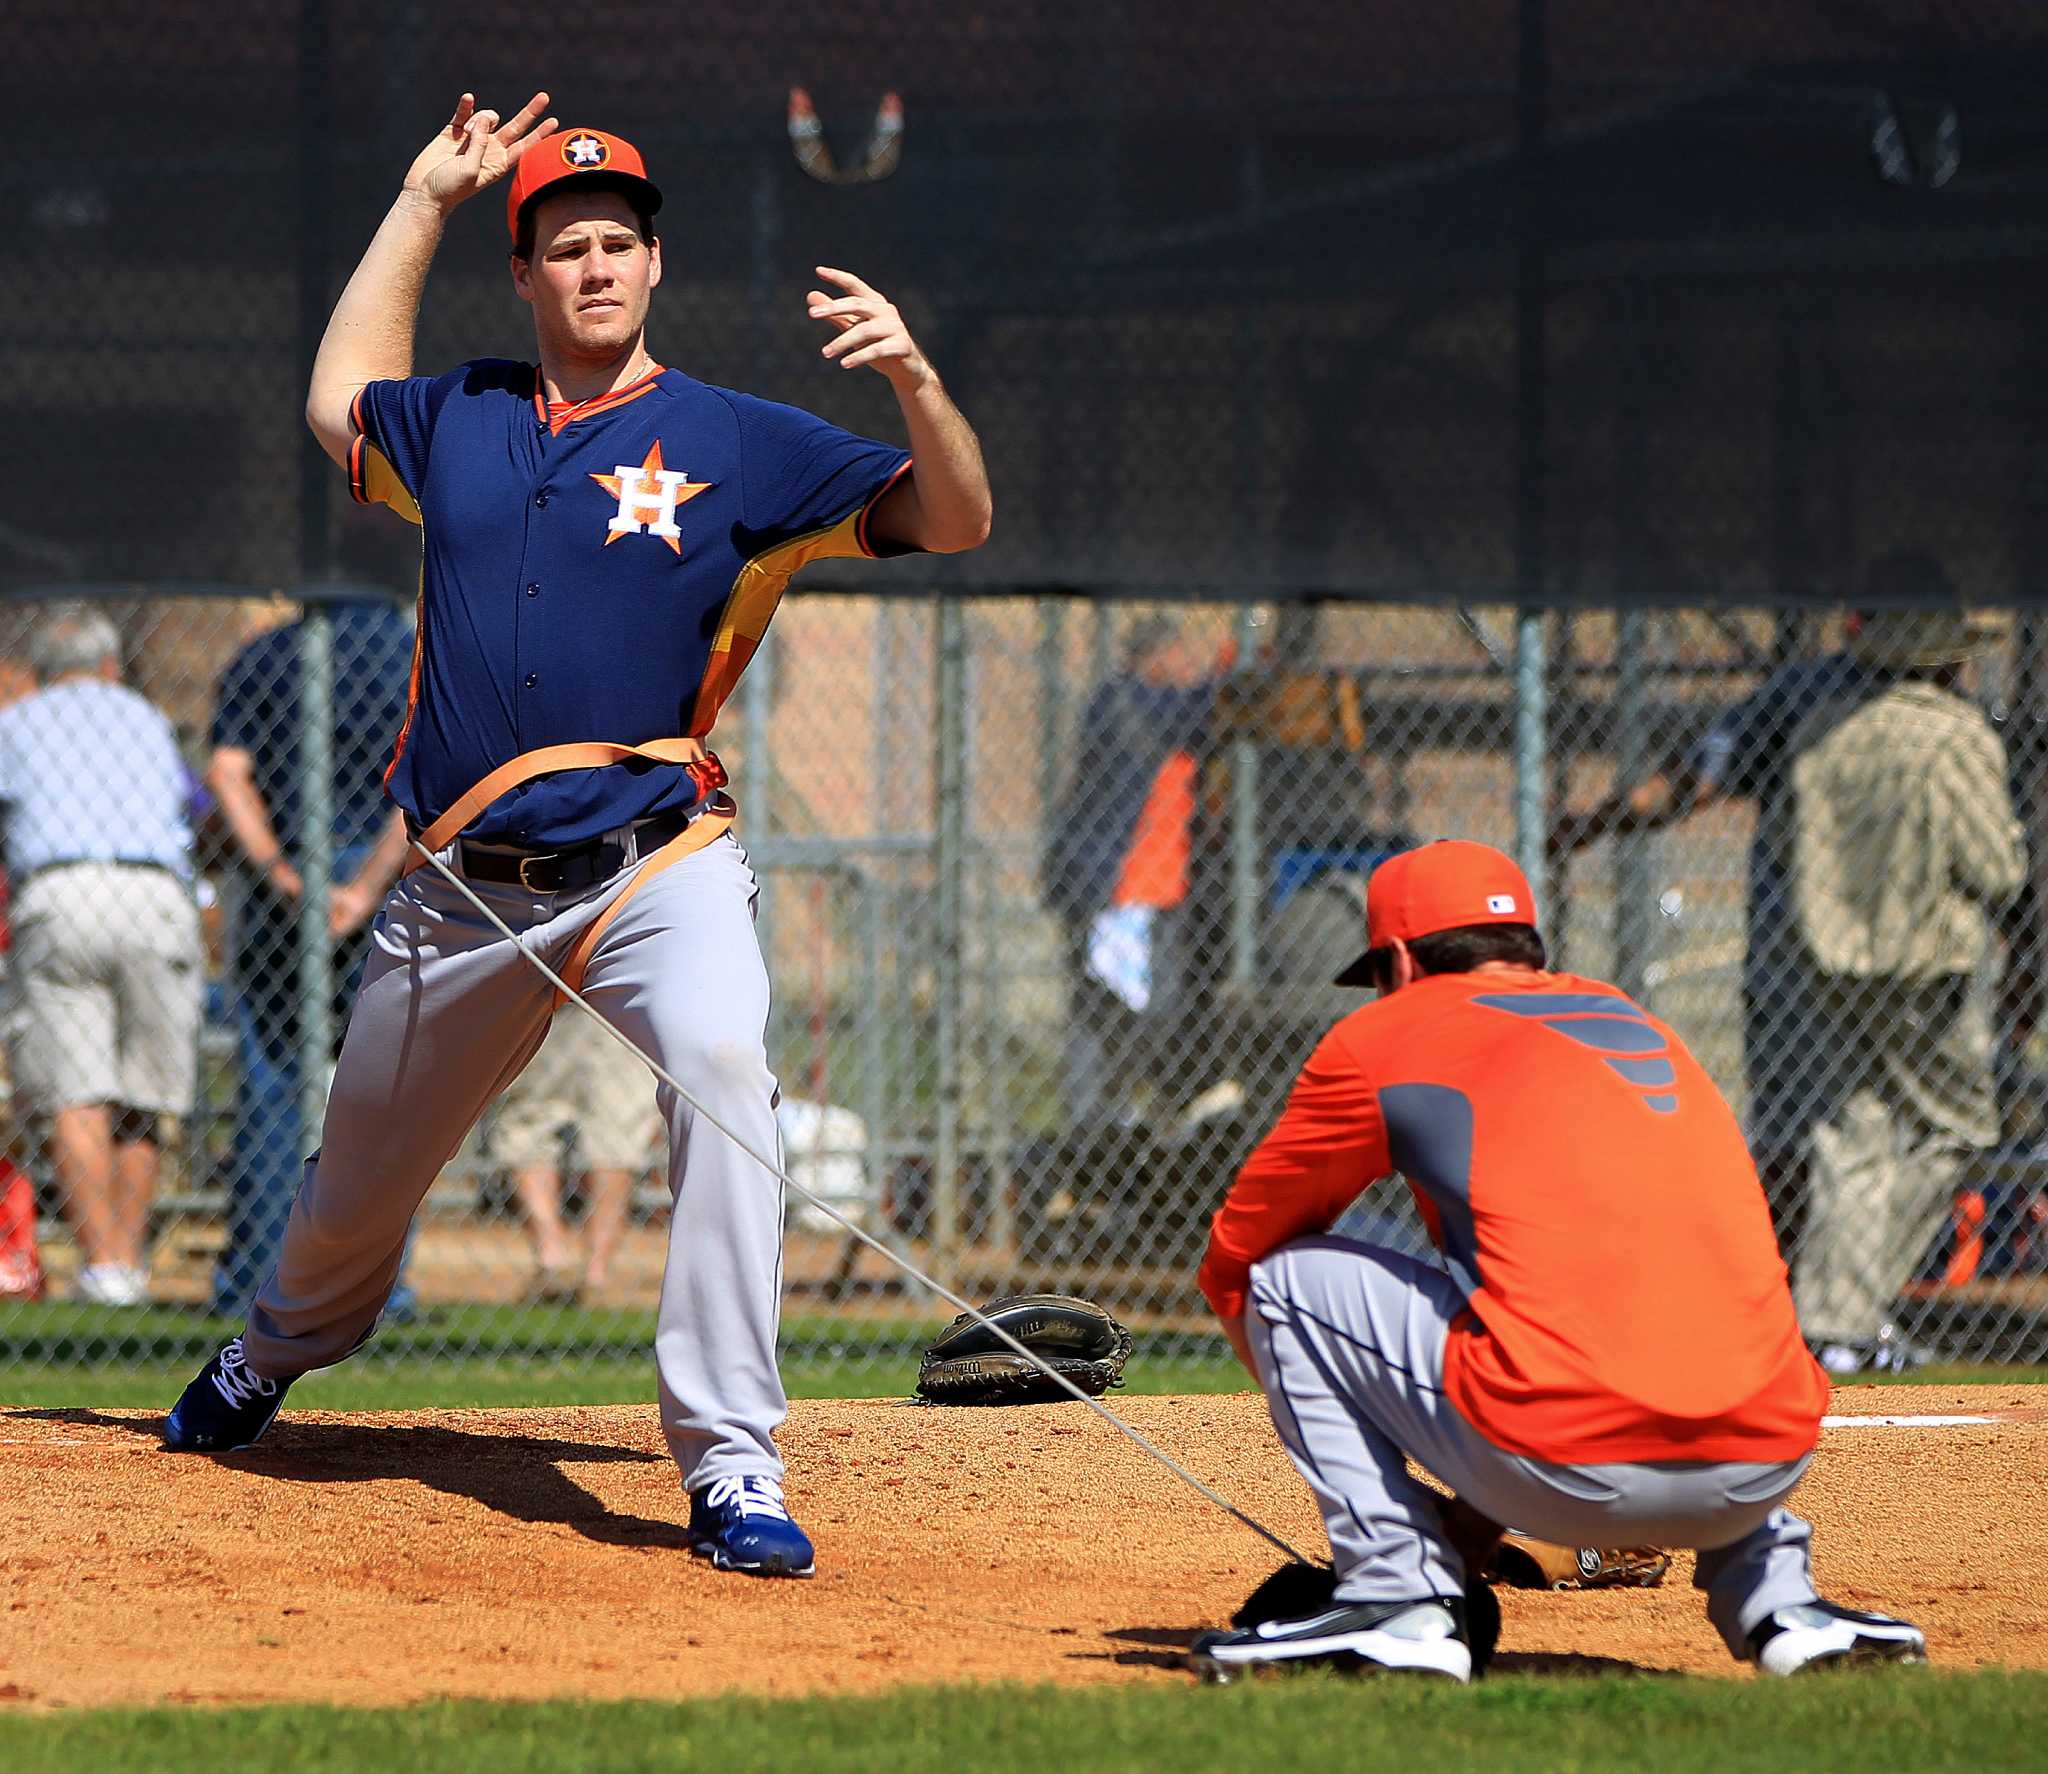 Pitching prospect Doran hopes to impress Astros